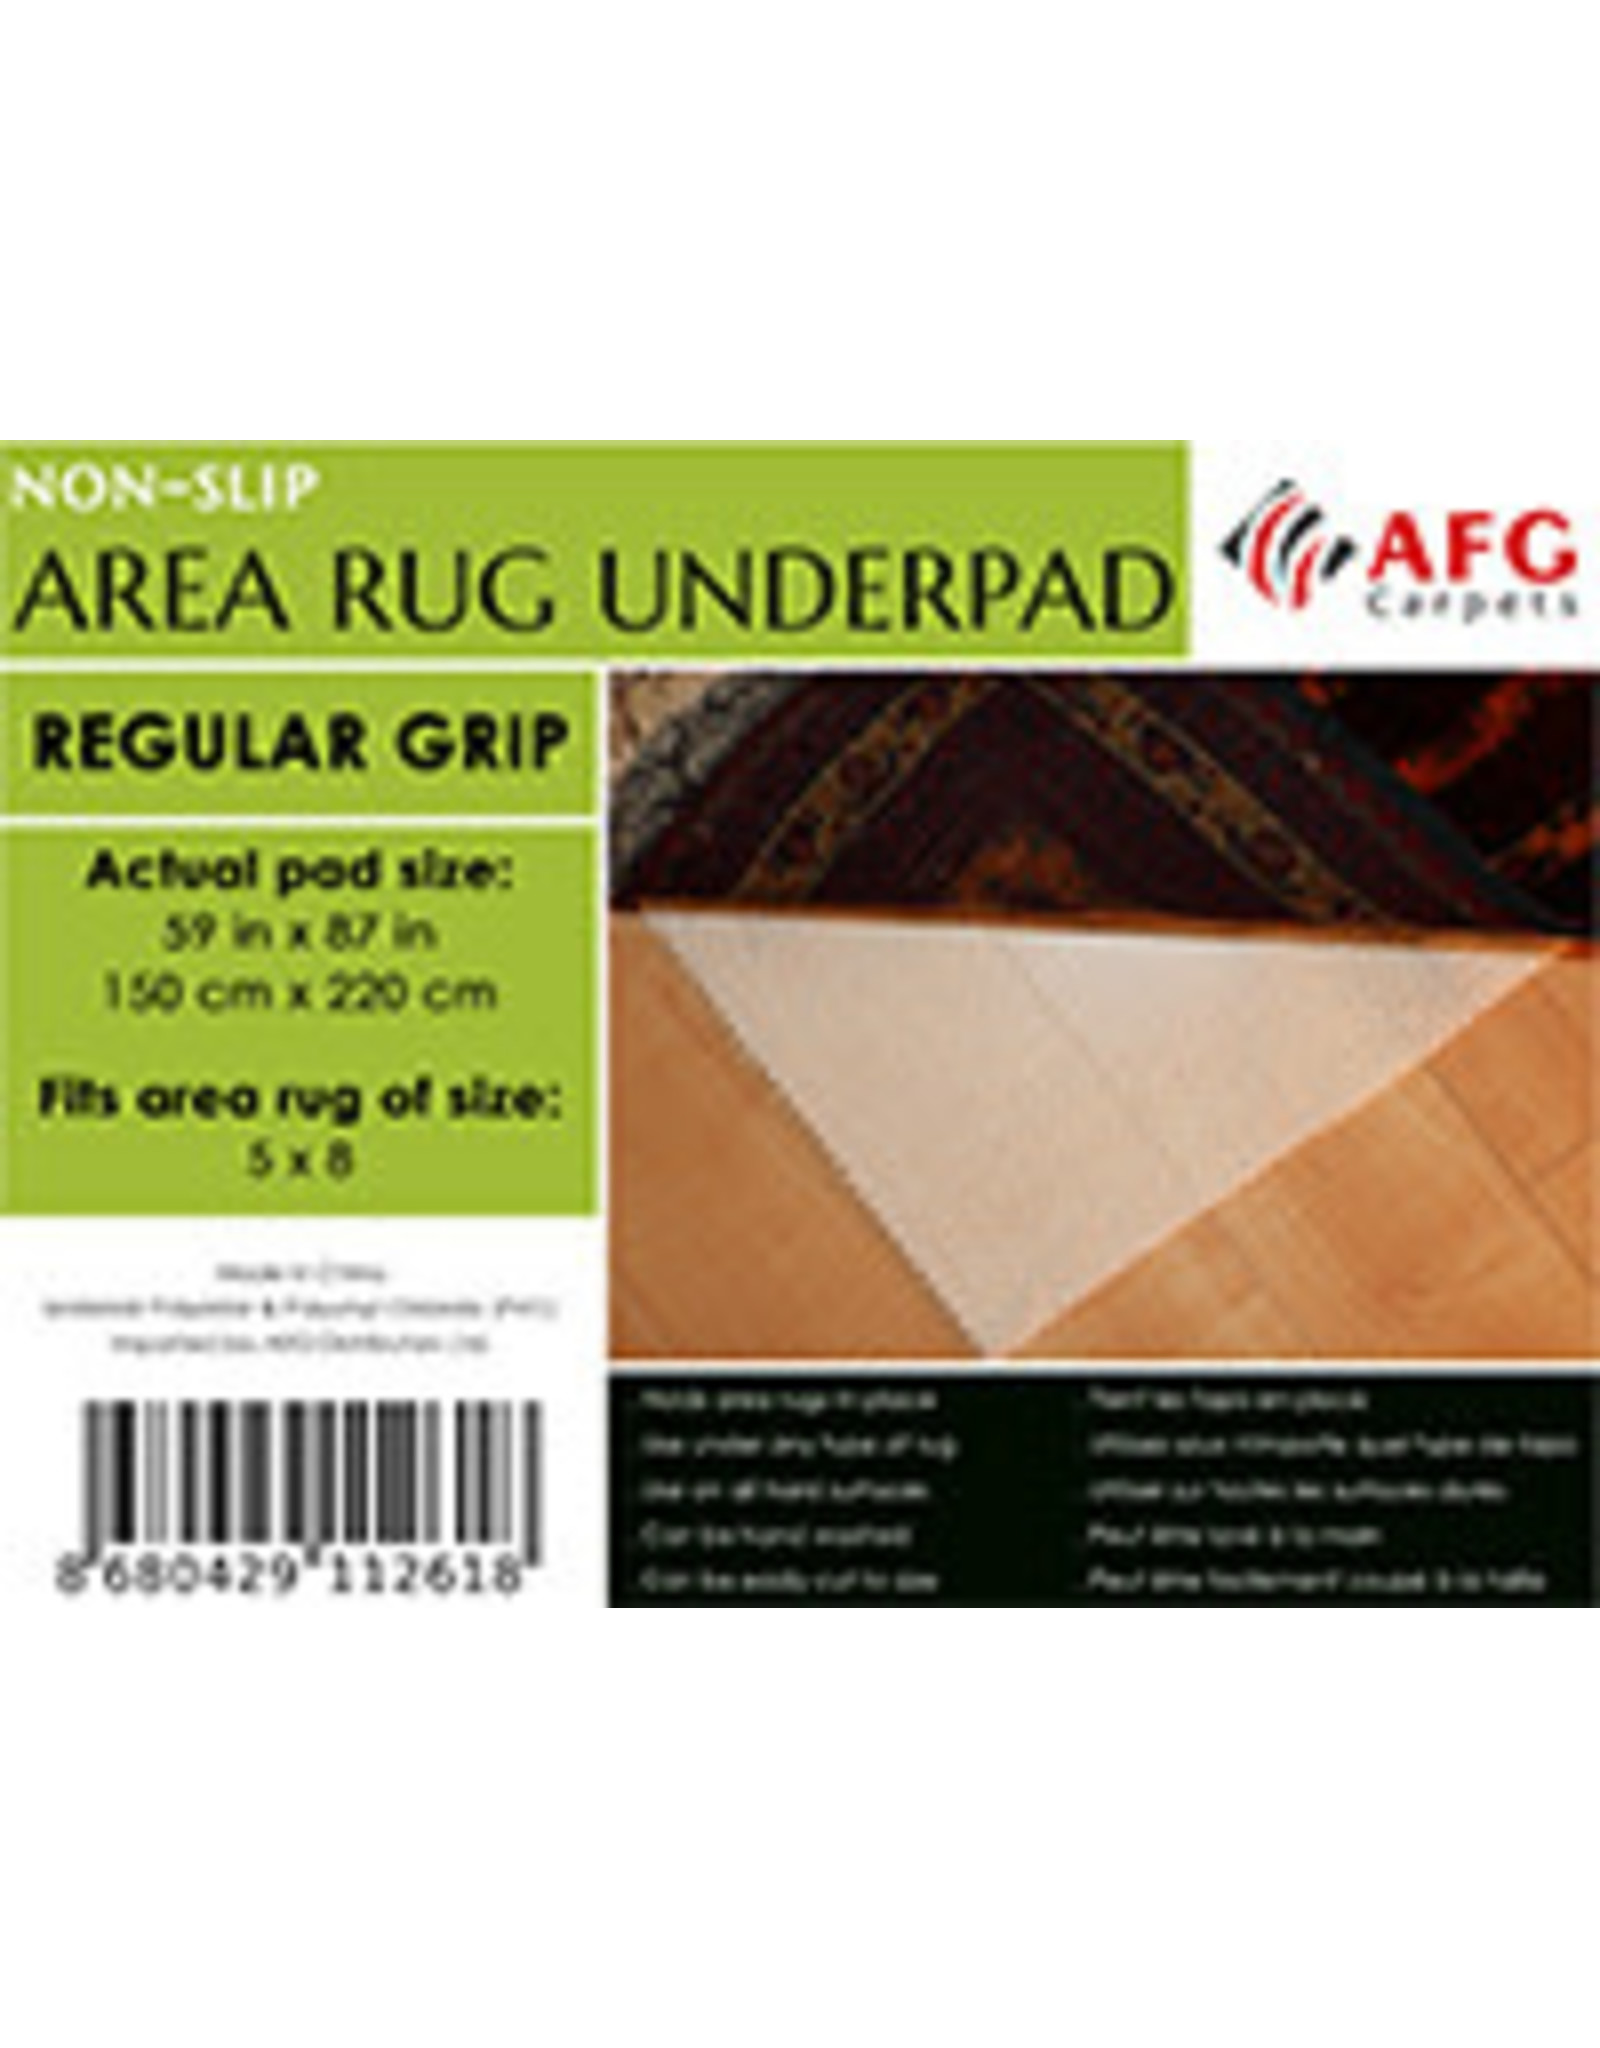 Area Rug Underpad - 5 x 8